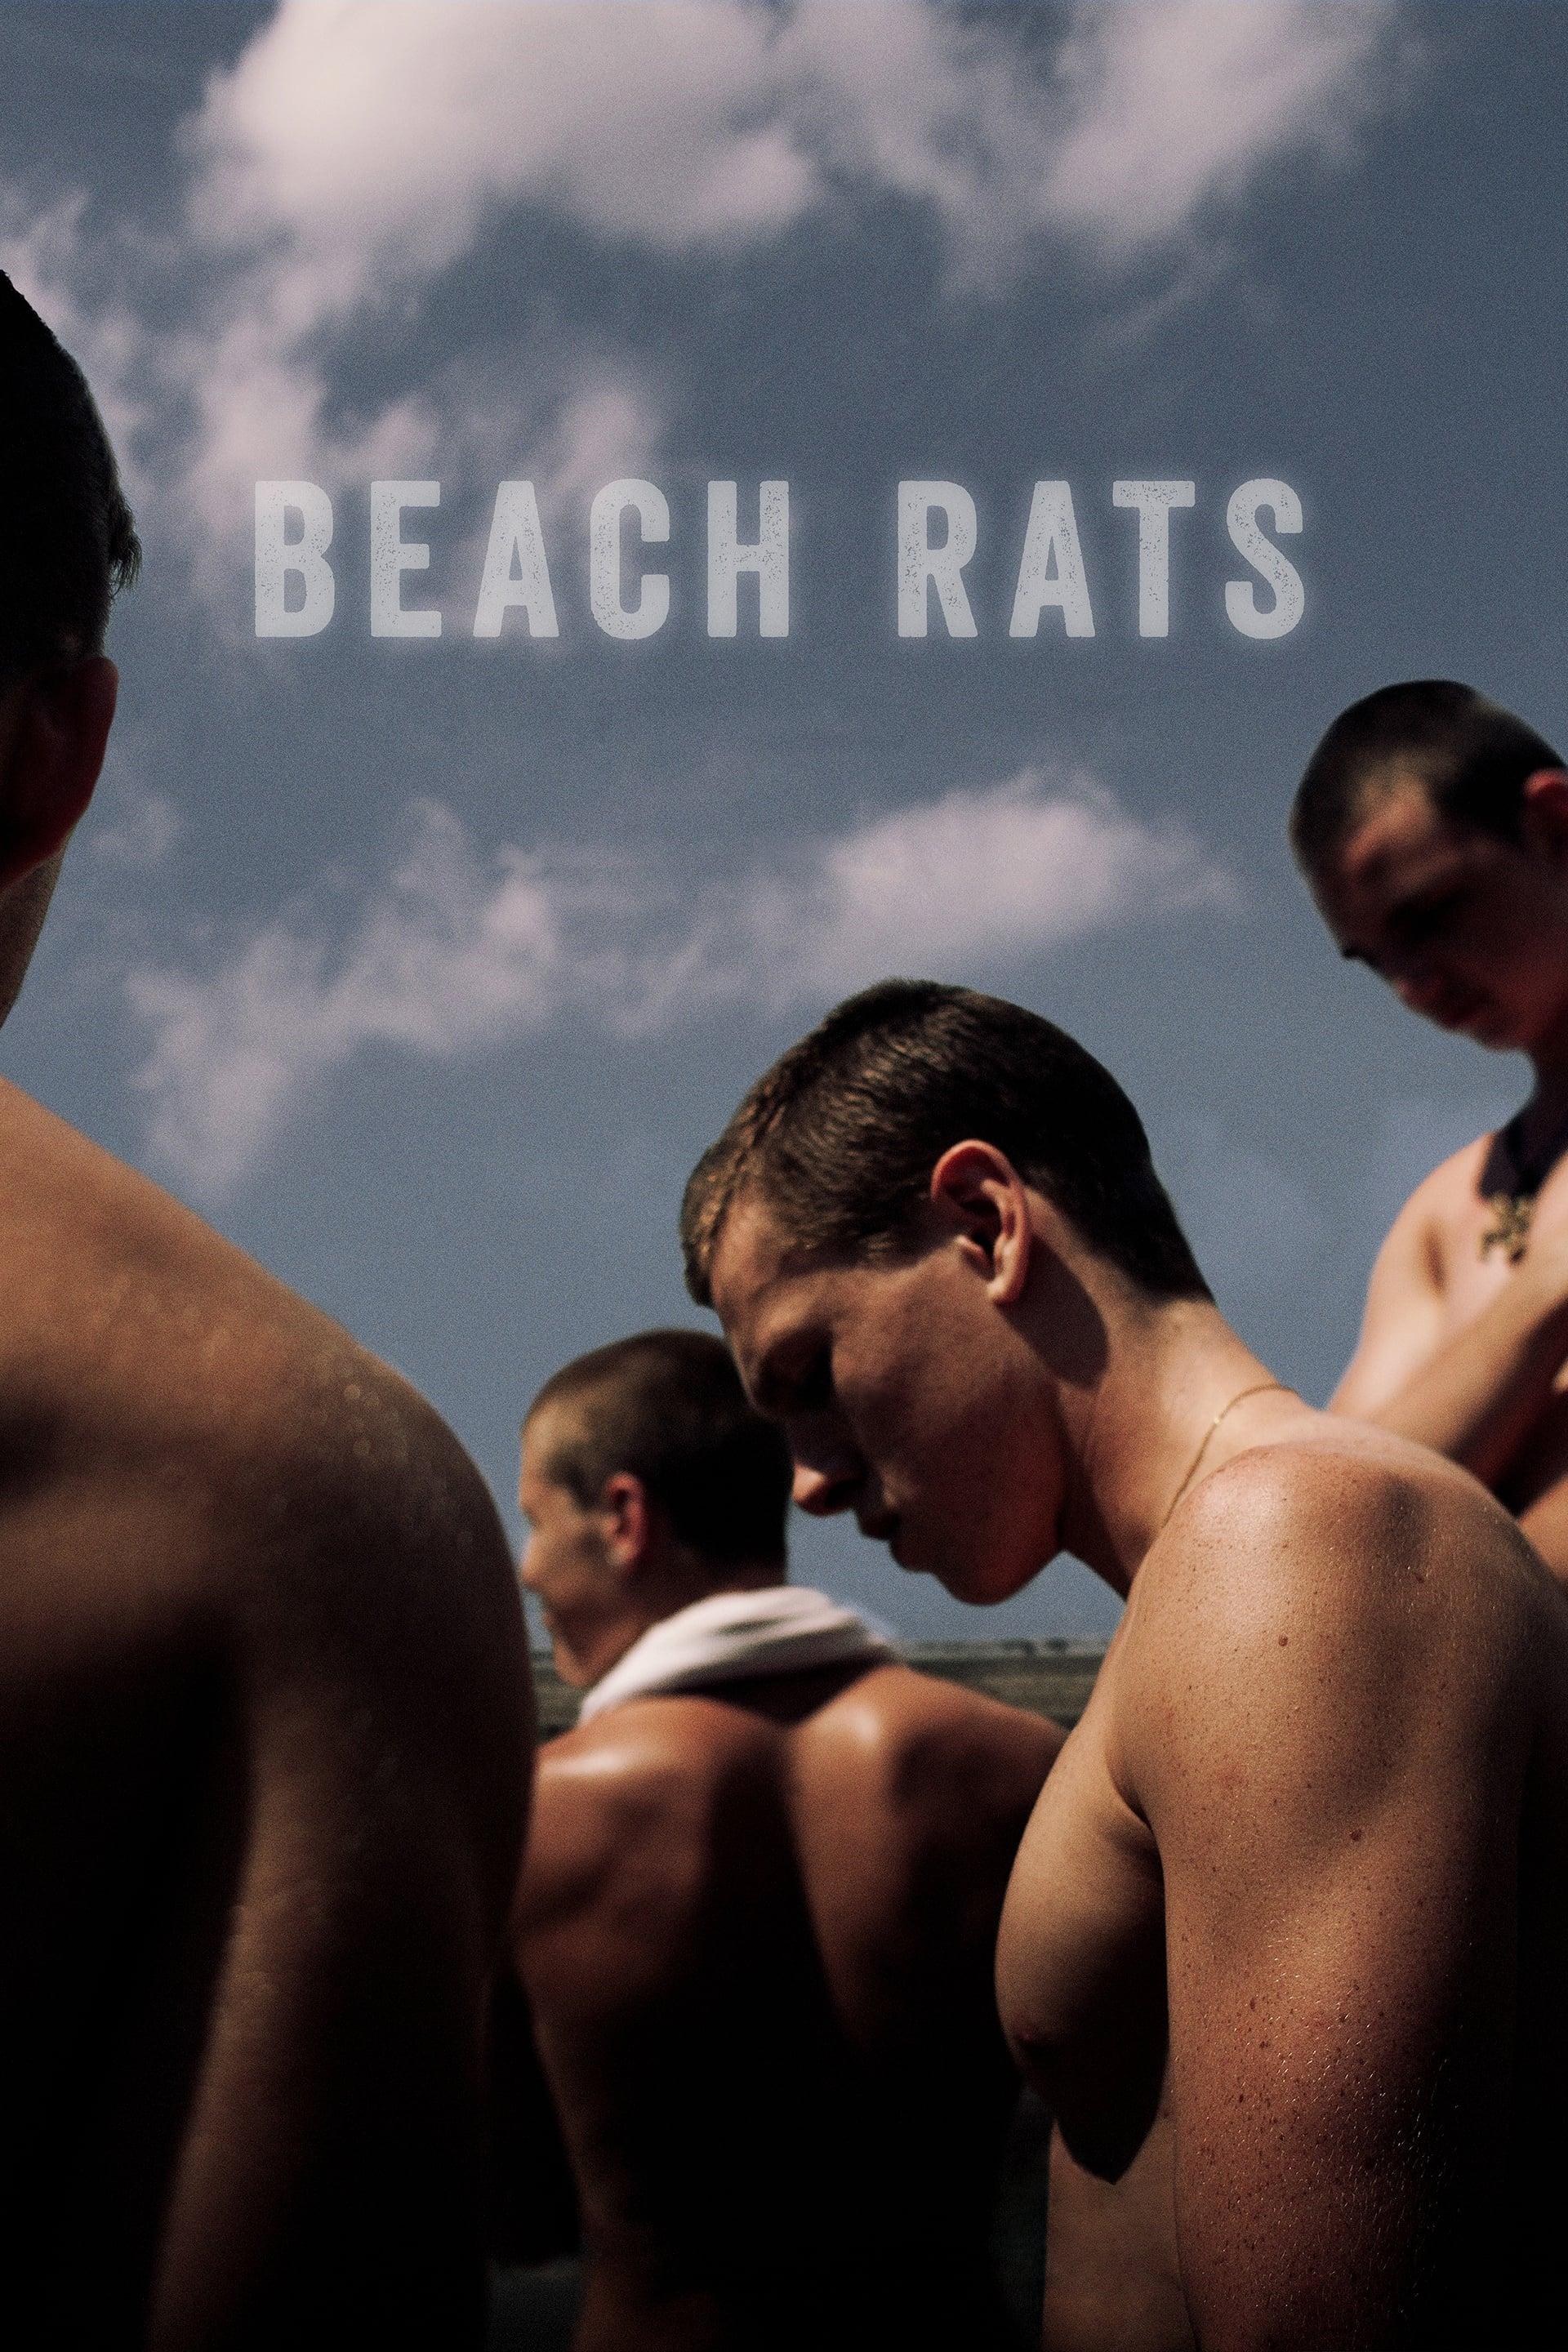 Beach Rats poster